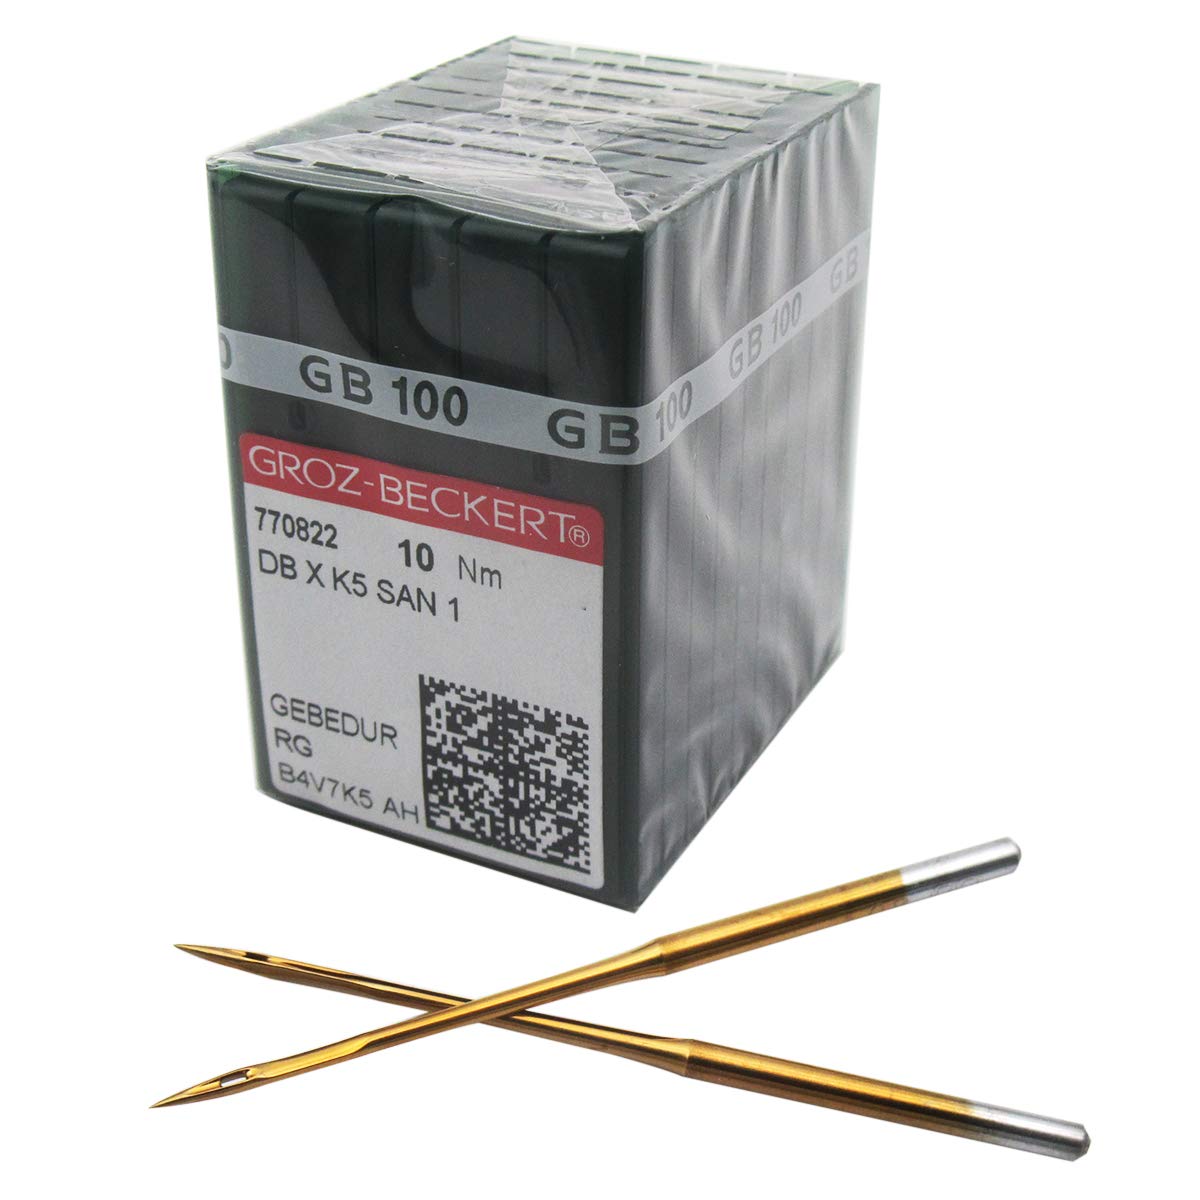 GROZ-BECKERT Needle in CKPSMS Clear Plastic Box - 100PCS Groz Beckert DBXK5 SAN1 GEBEDUR Titanium Coated Industrial Embroidery Machine Needles (Size 75/11)